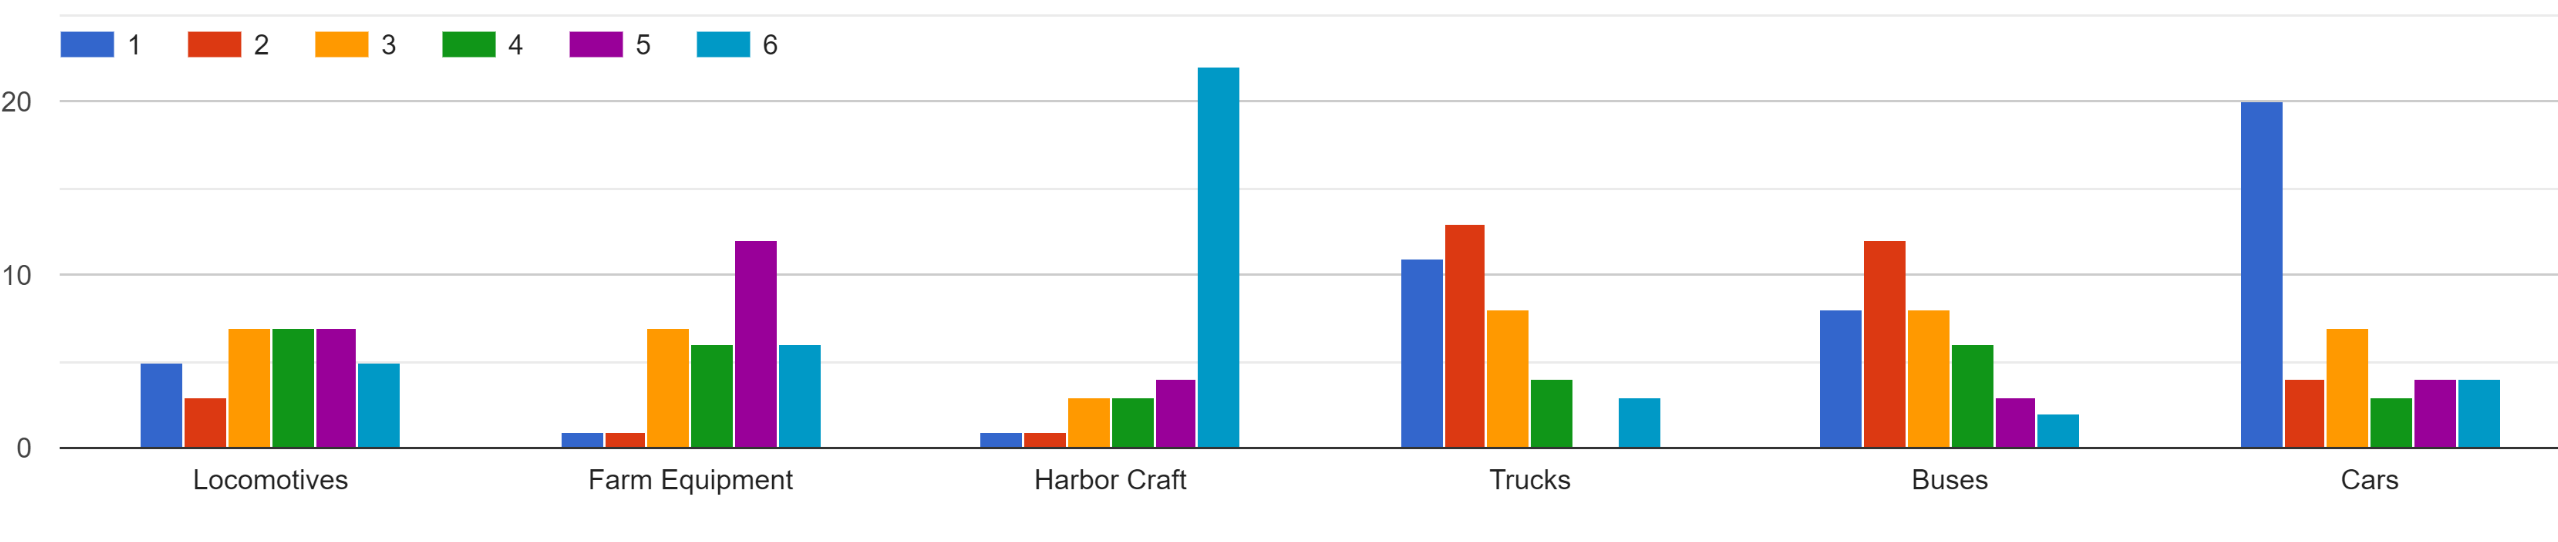 Graph showing individual needs ranking #1 Cars, #2 Trucks, #3Buses, #4 Locomotives, #5 Farm Equipment, #6 Harbor Craft